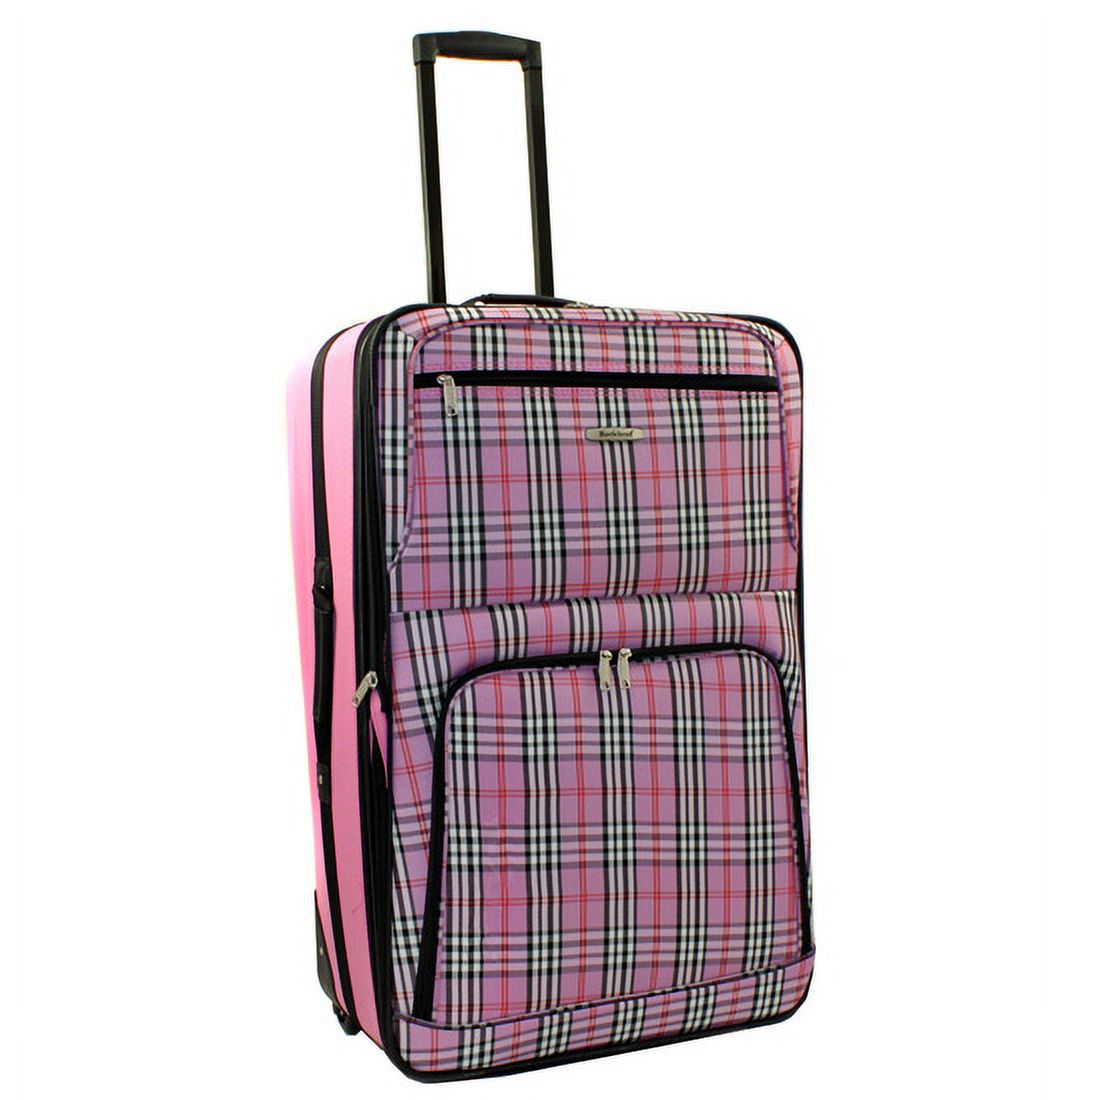 Rockland Luggage Fashion Collection 4 Piece Softside Expandable Luggage Set - image 3 of 5